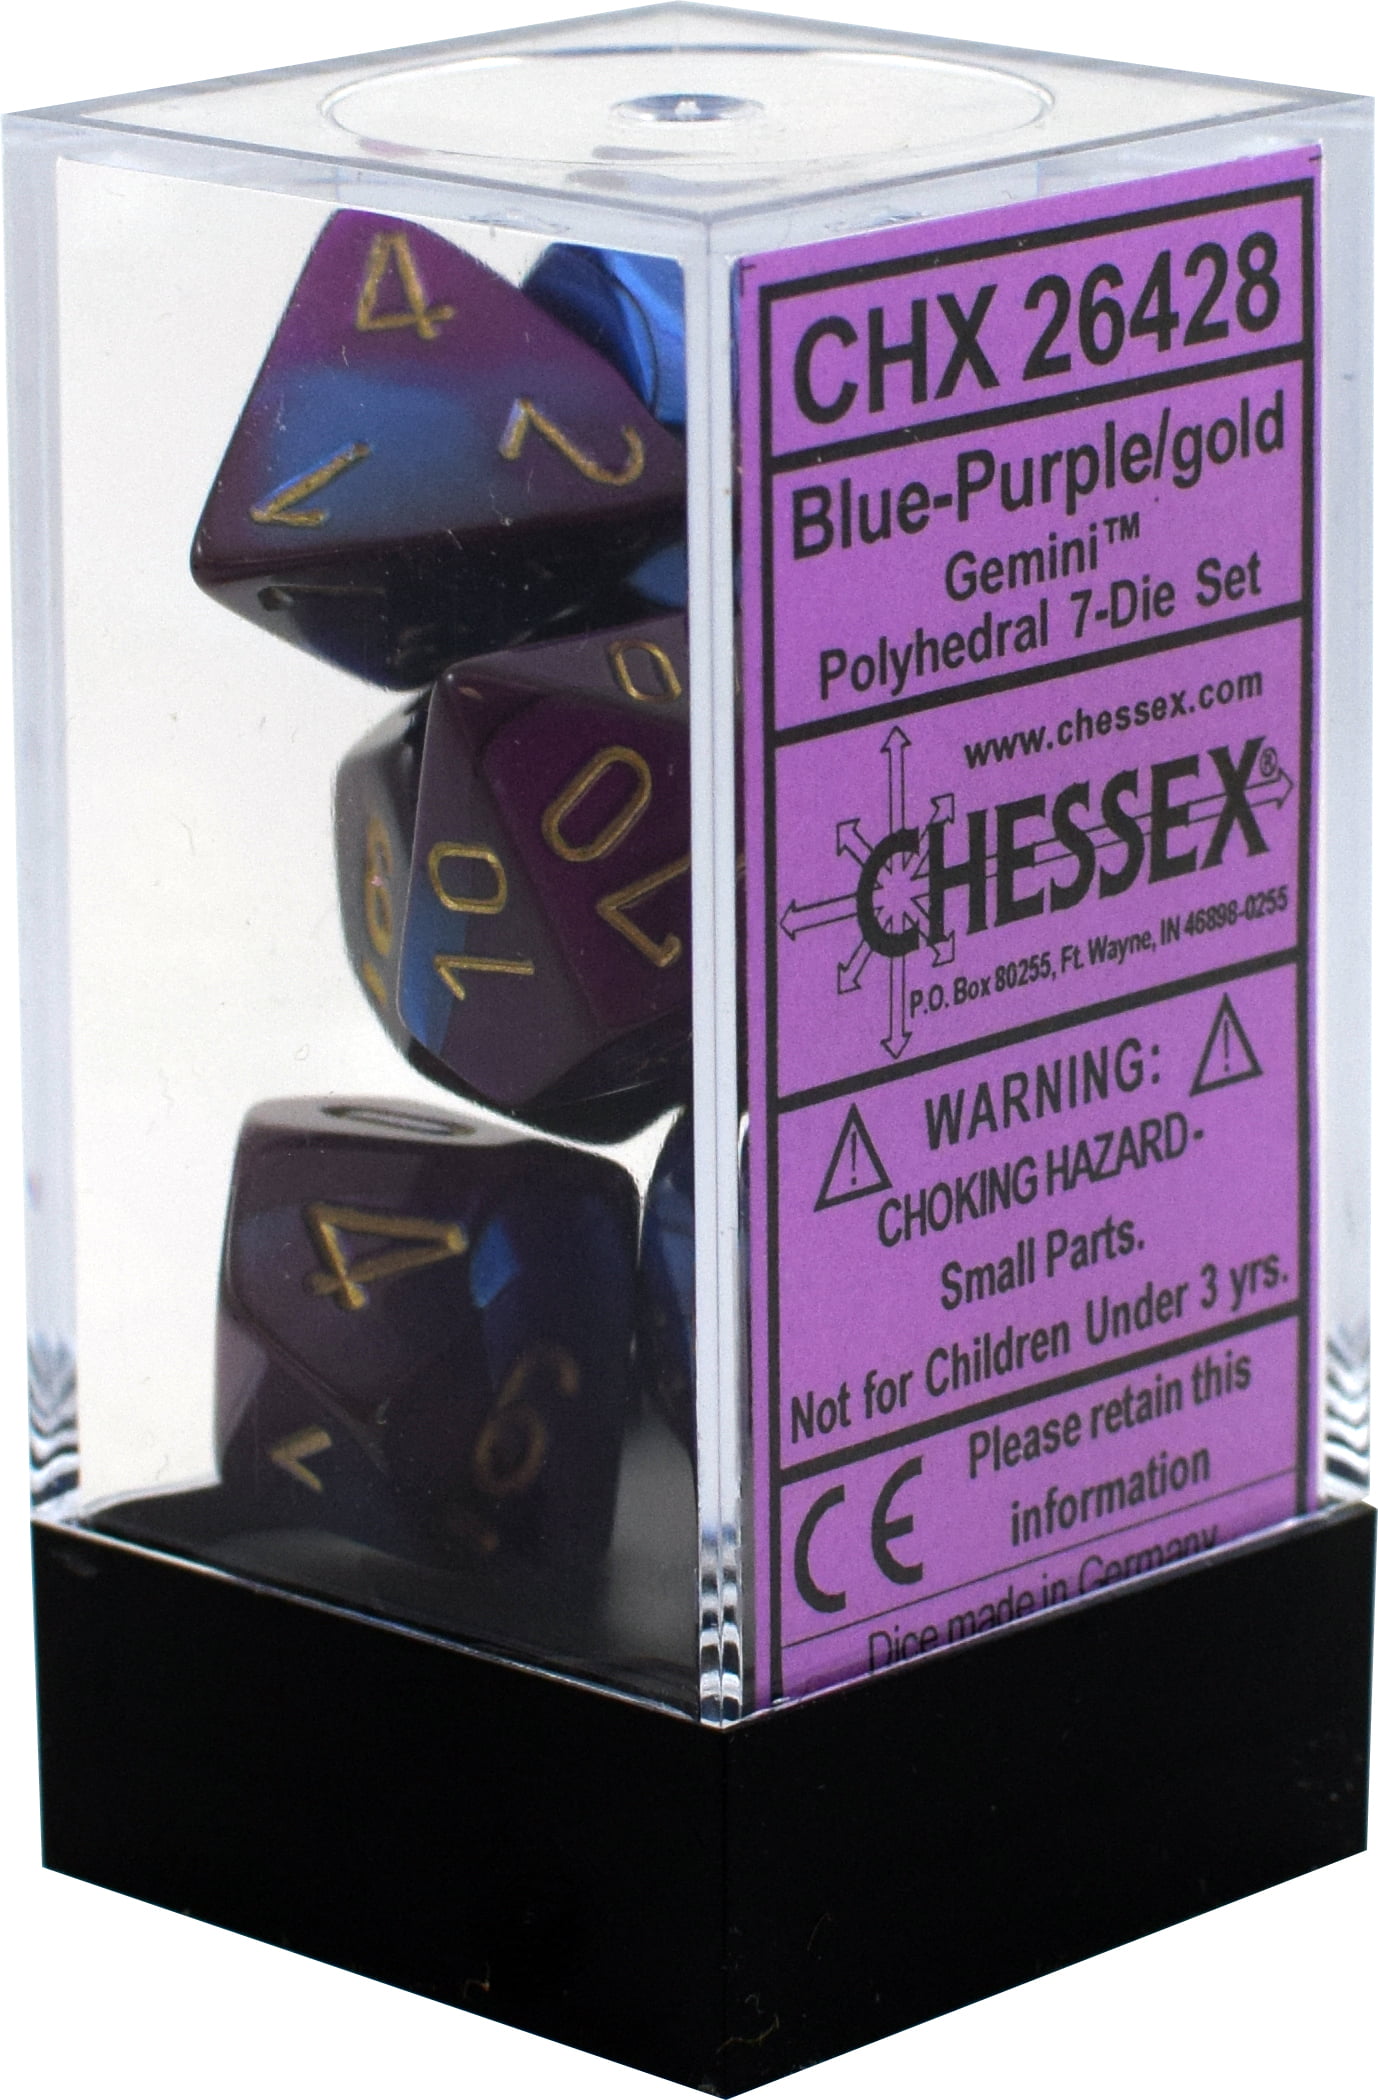 CHESSEX Gemini Blue-Purple CUBO SET Boxed chx26428 